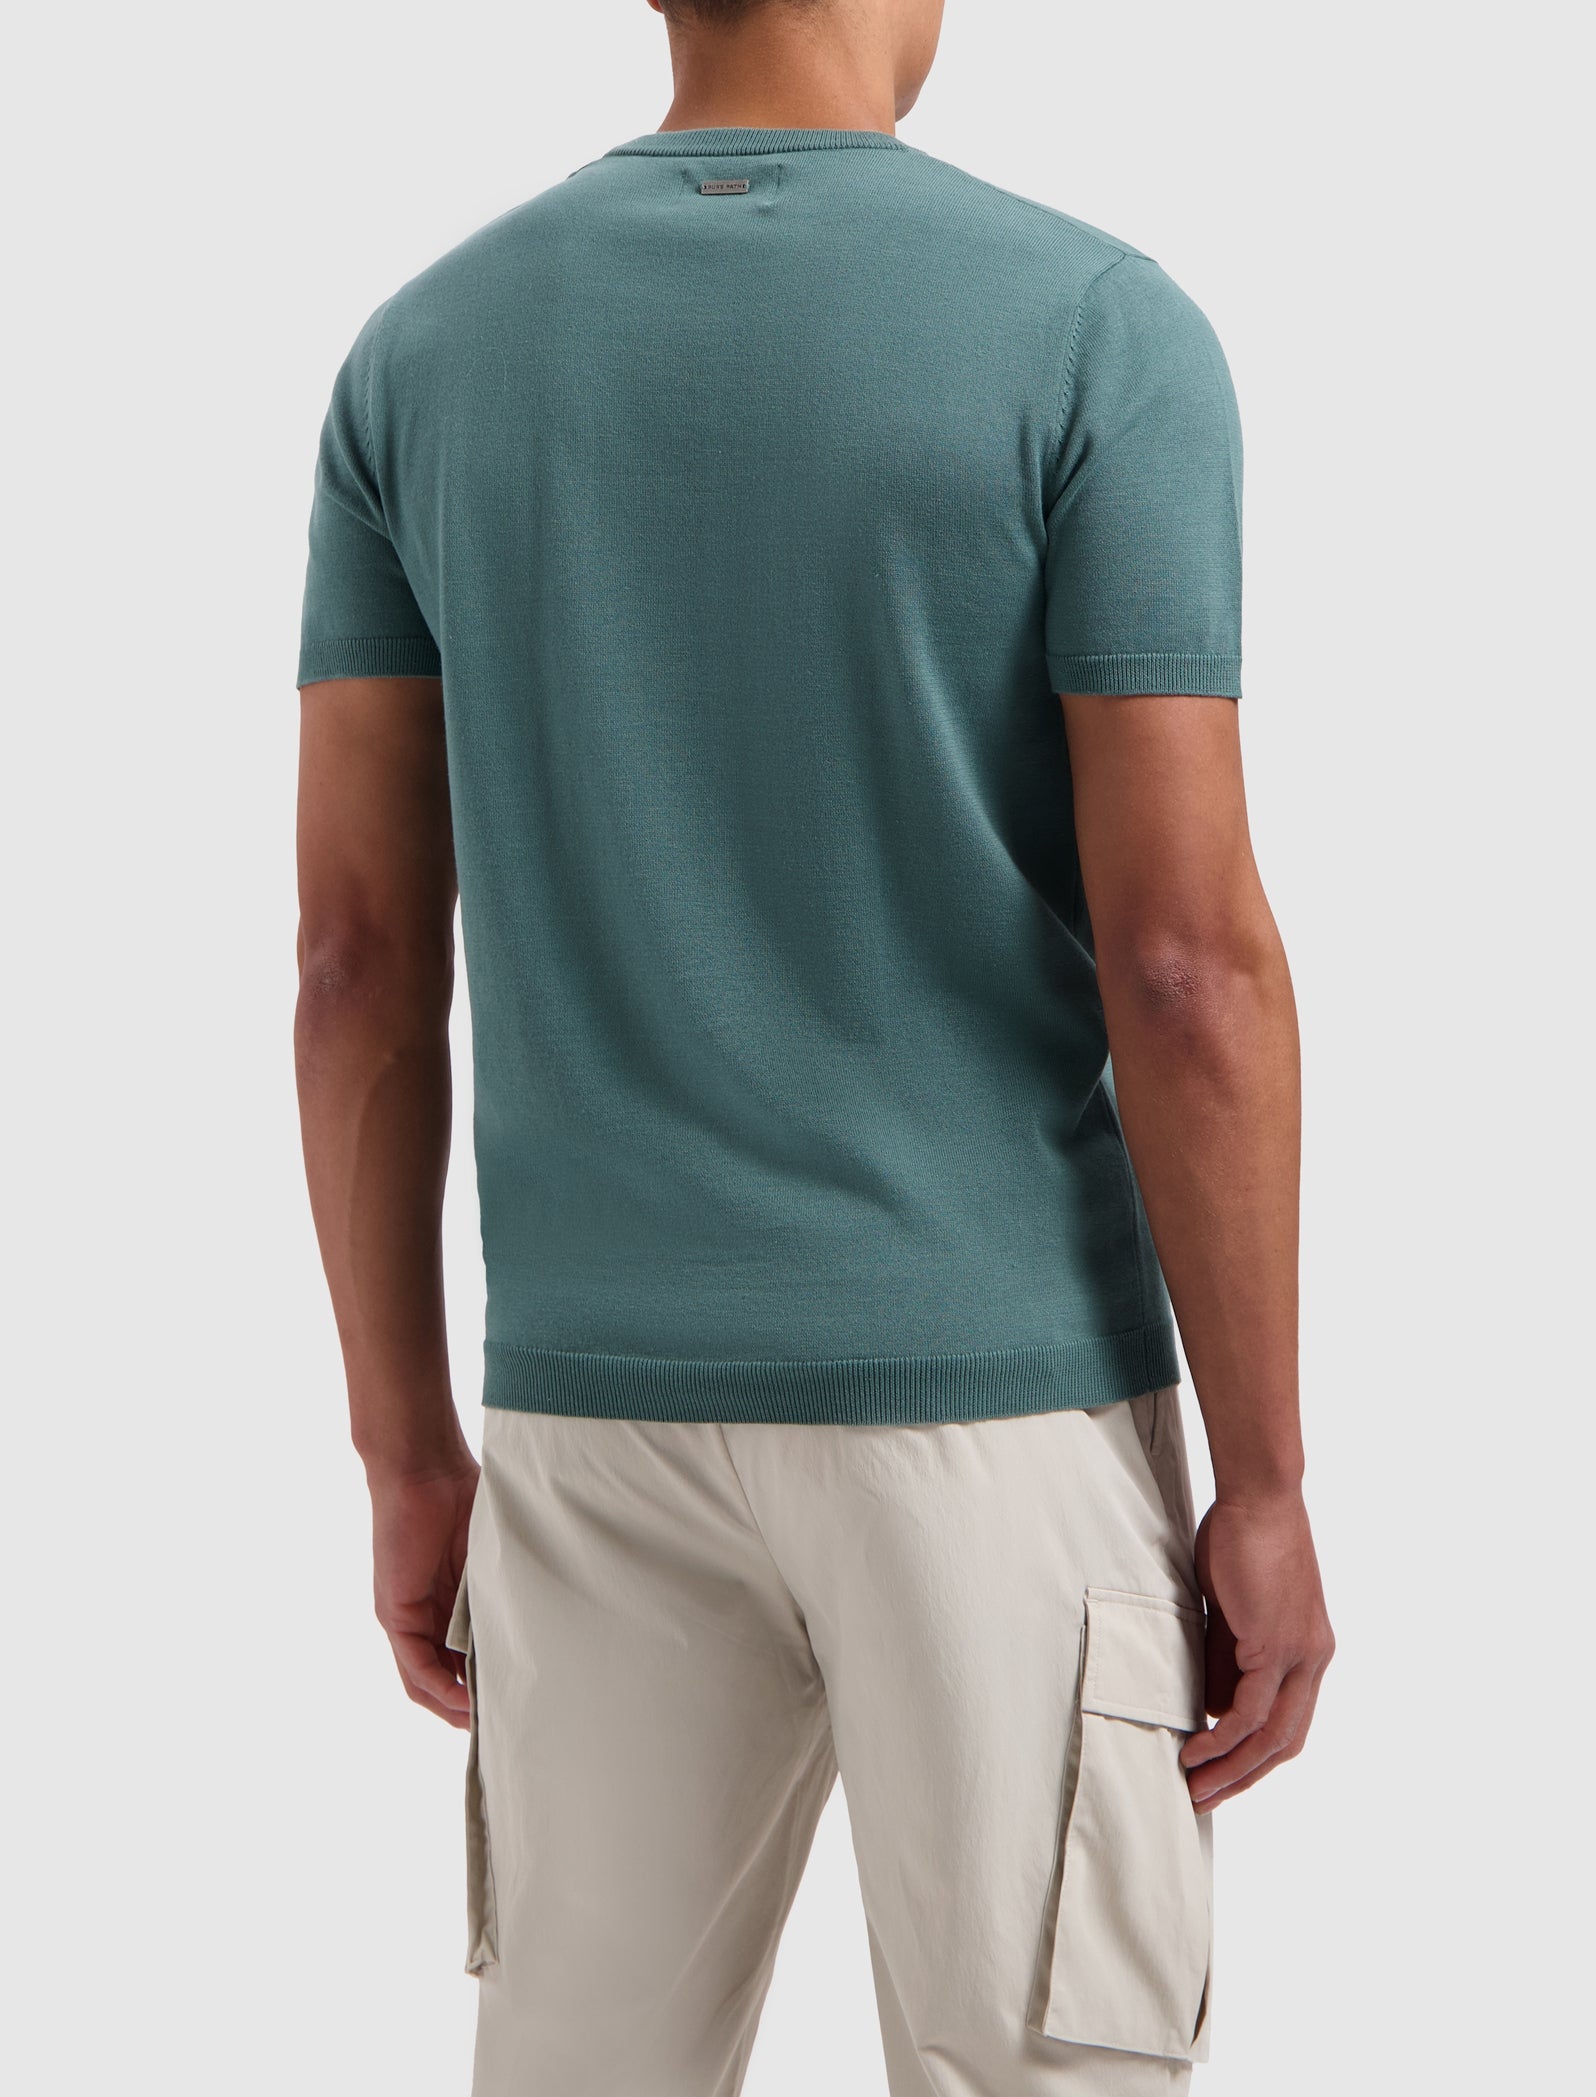 Knitwear T-shirt | Faded Green